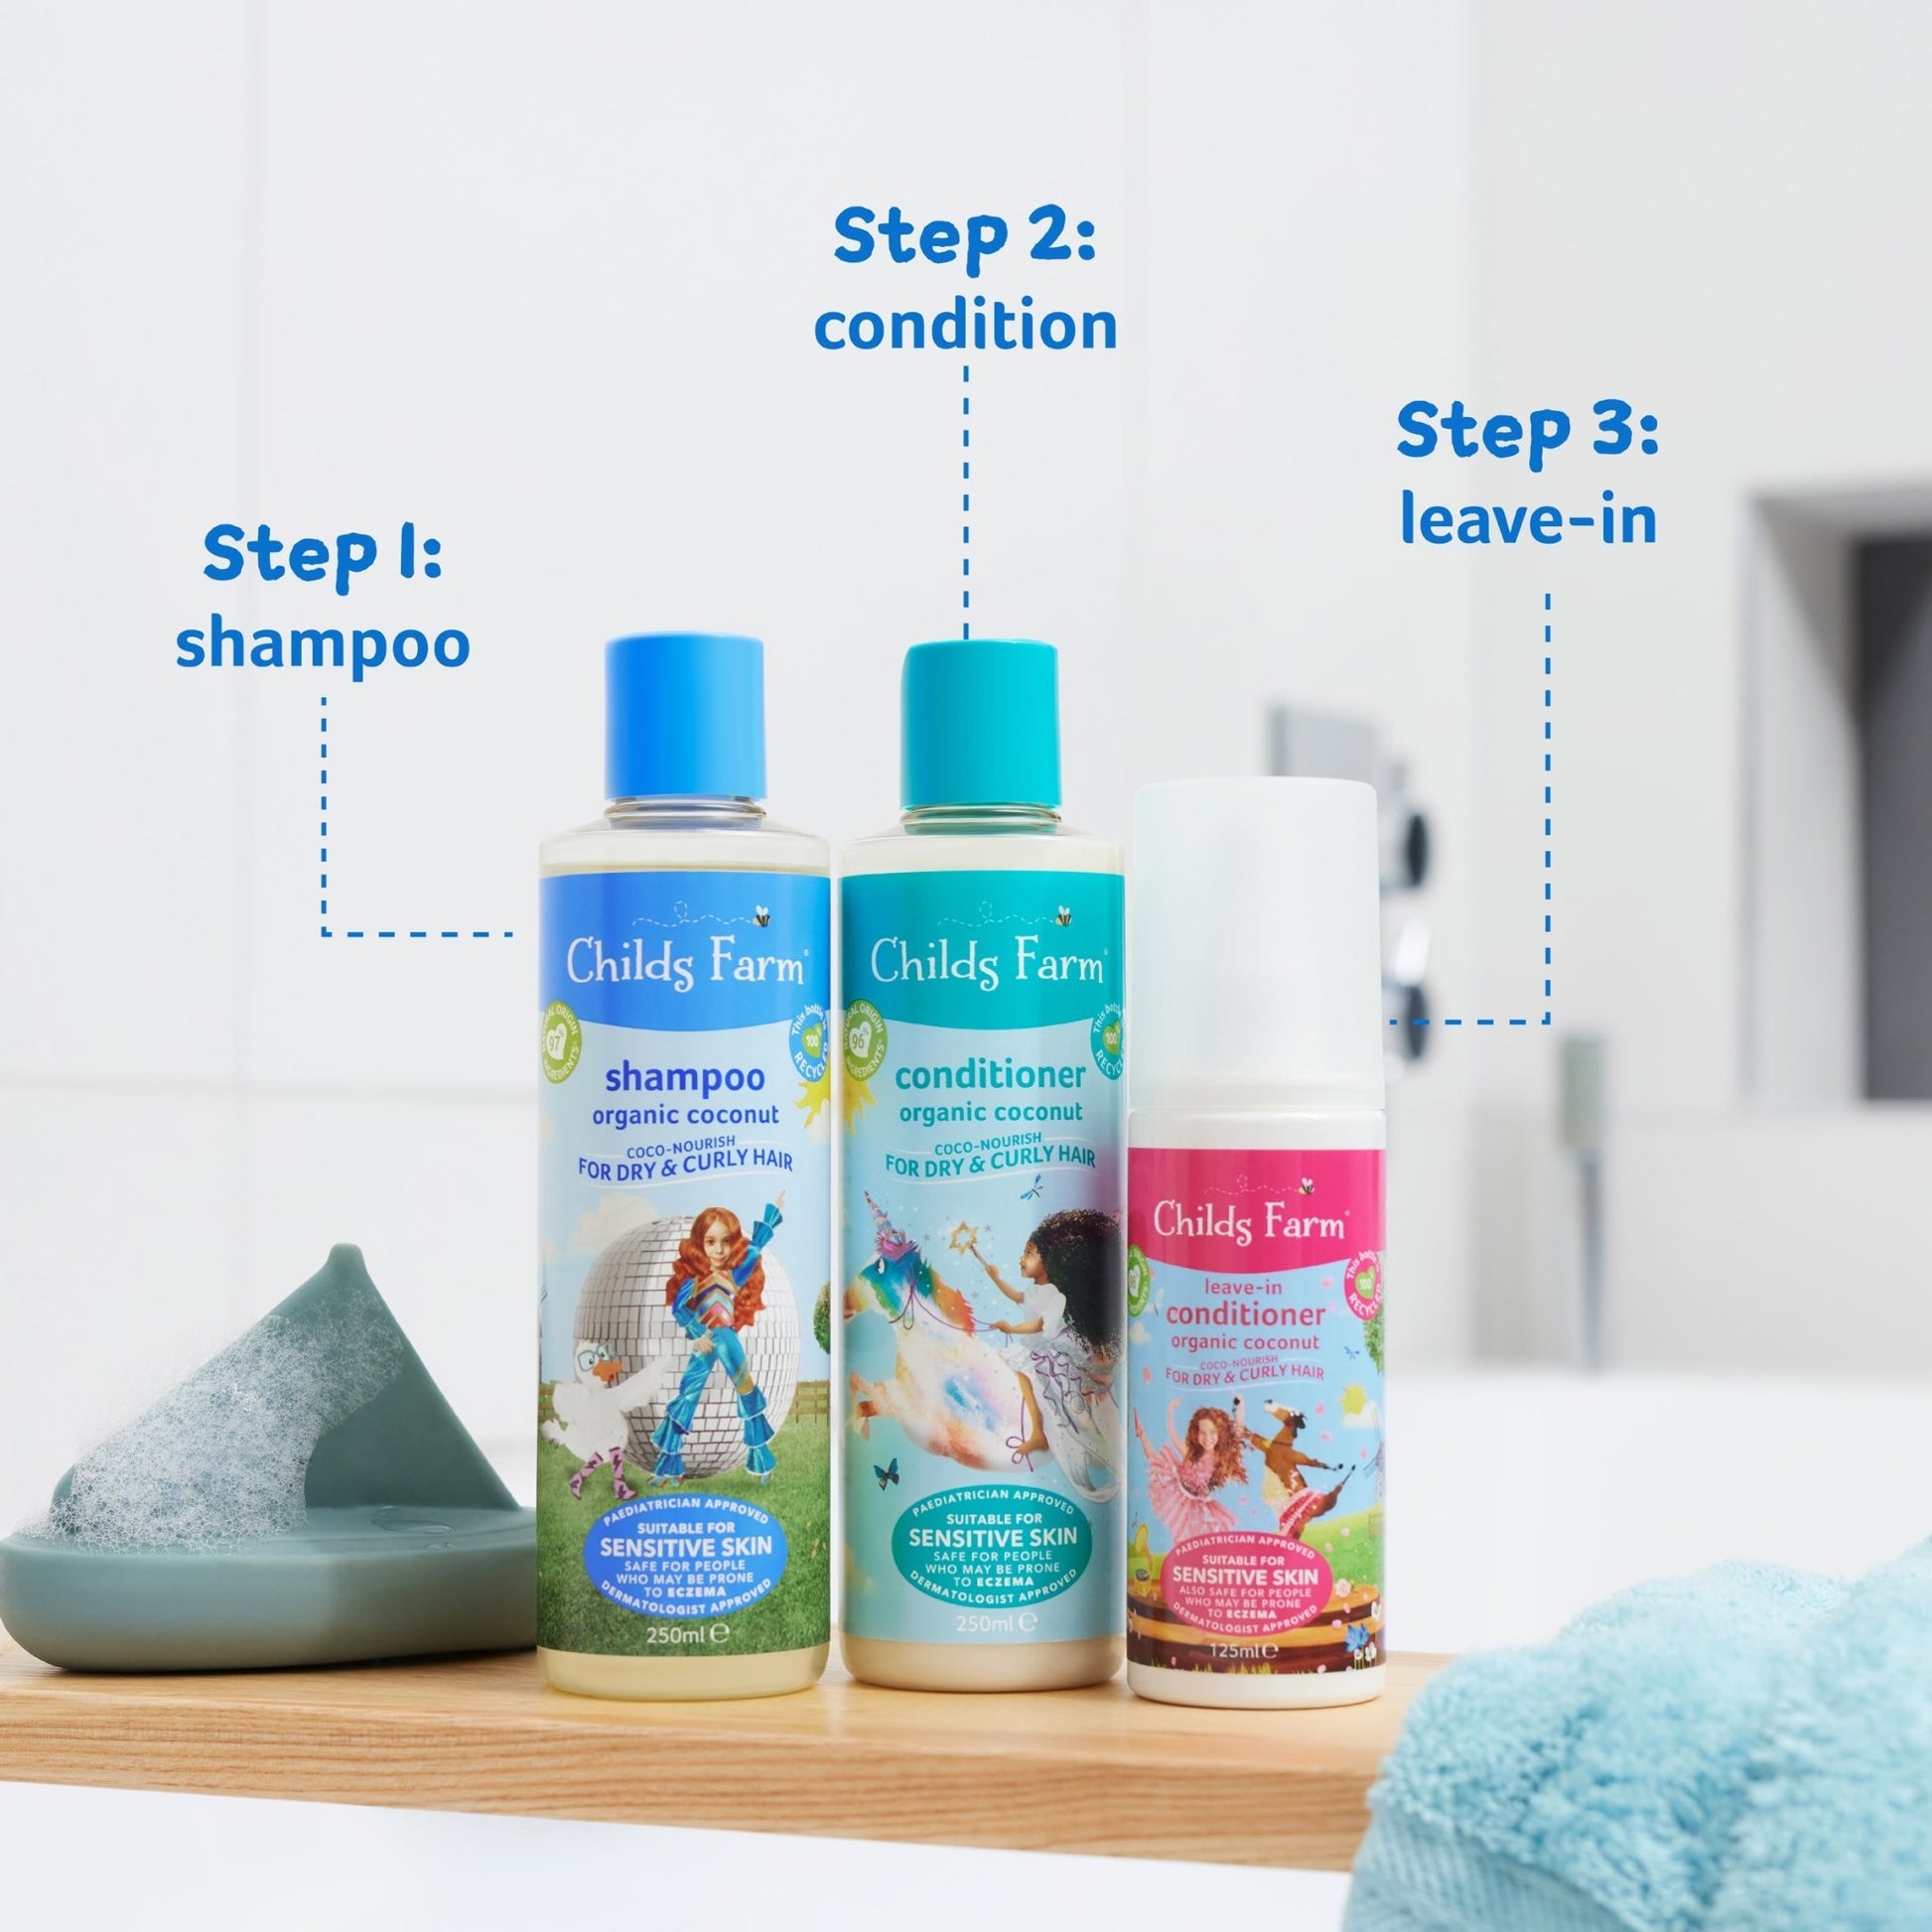 [STAFF] coco-nourish shampoo